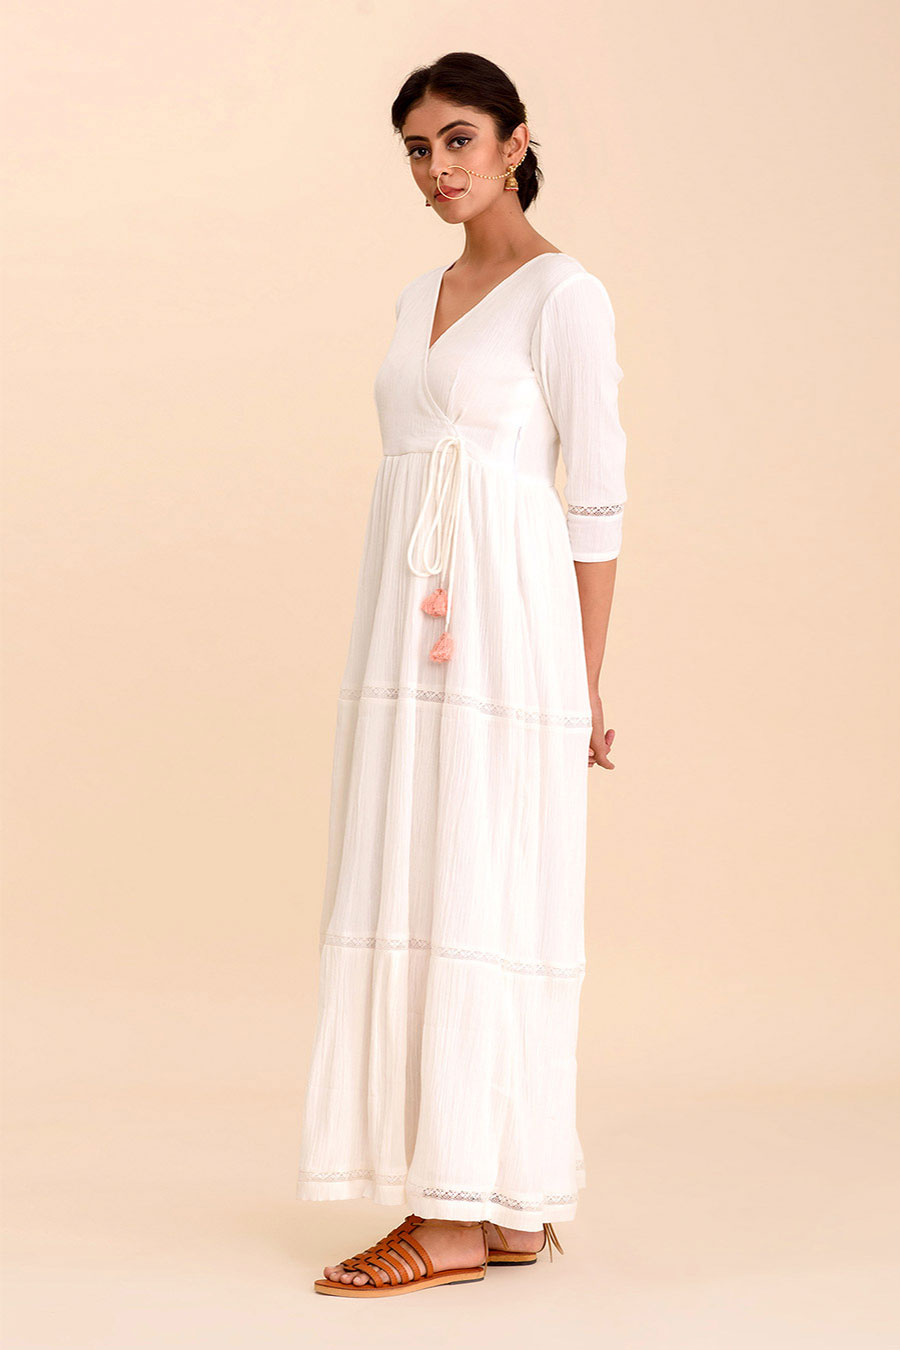 JALMAY - A Line White Maxi Dress